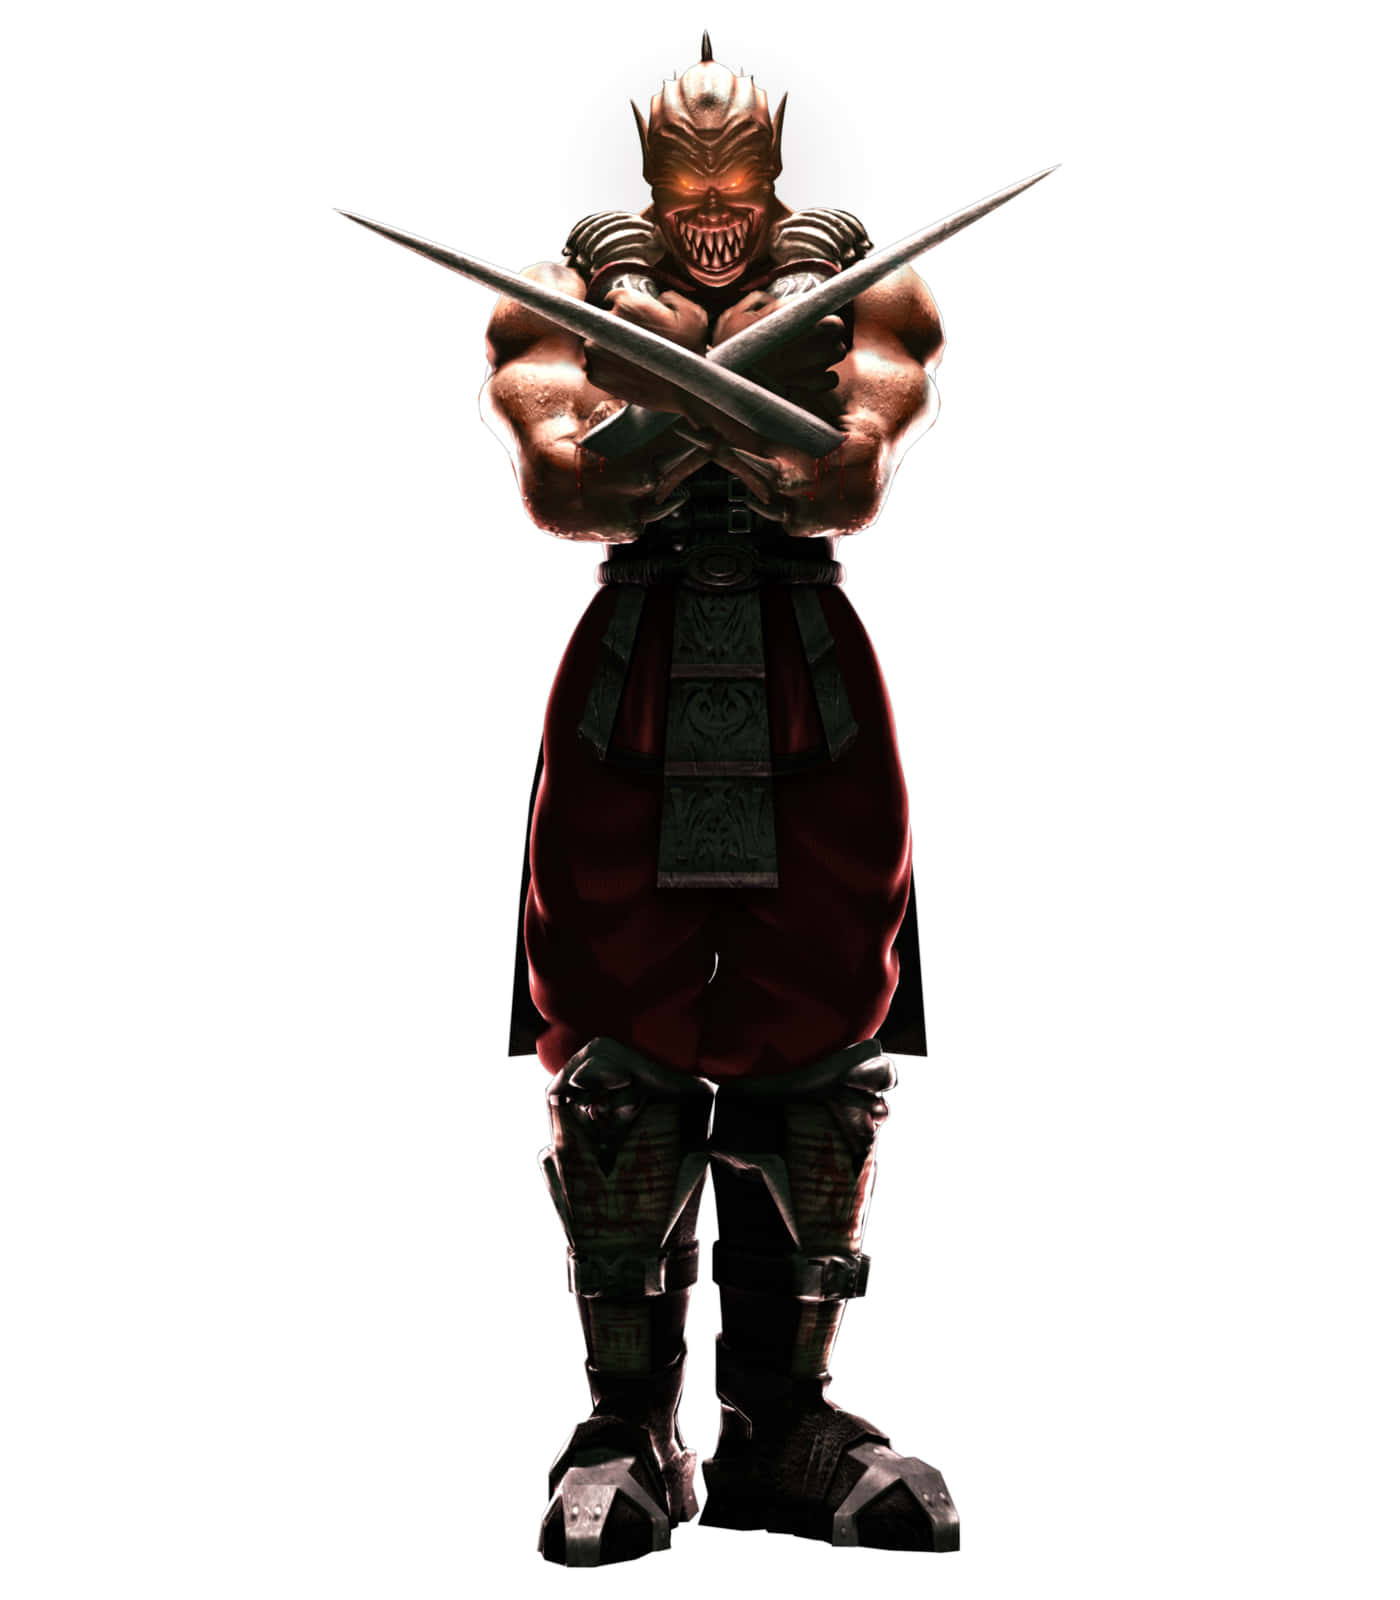 Fierce Mortal Kombat Warrior - Baraka Unleashes His Blades Wallpaper